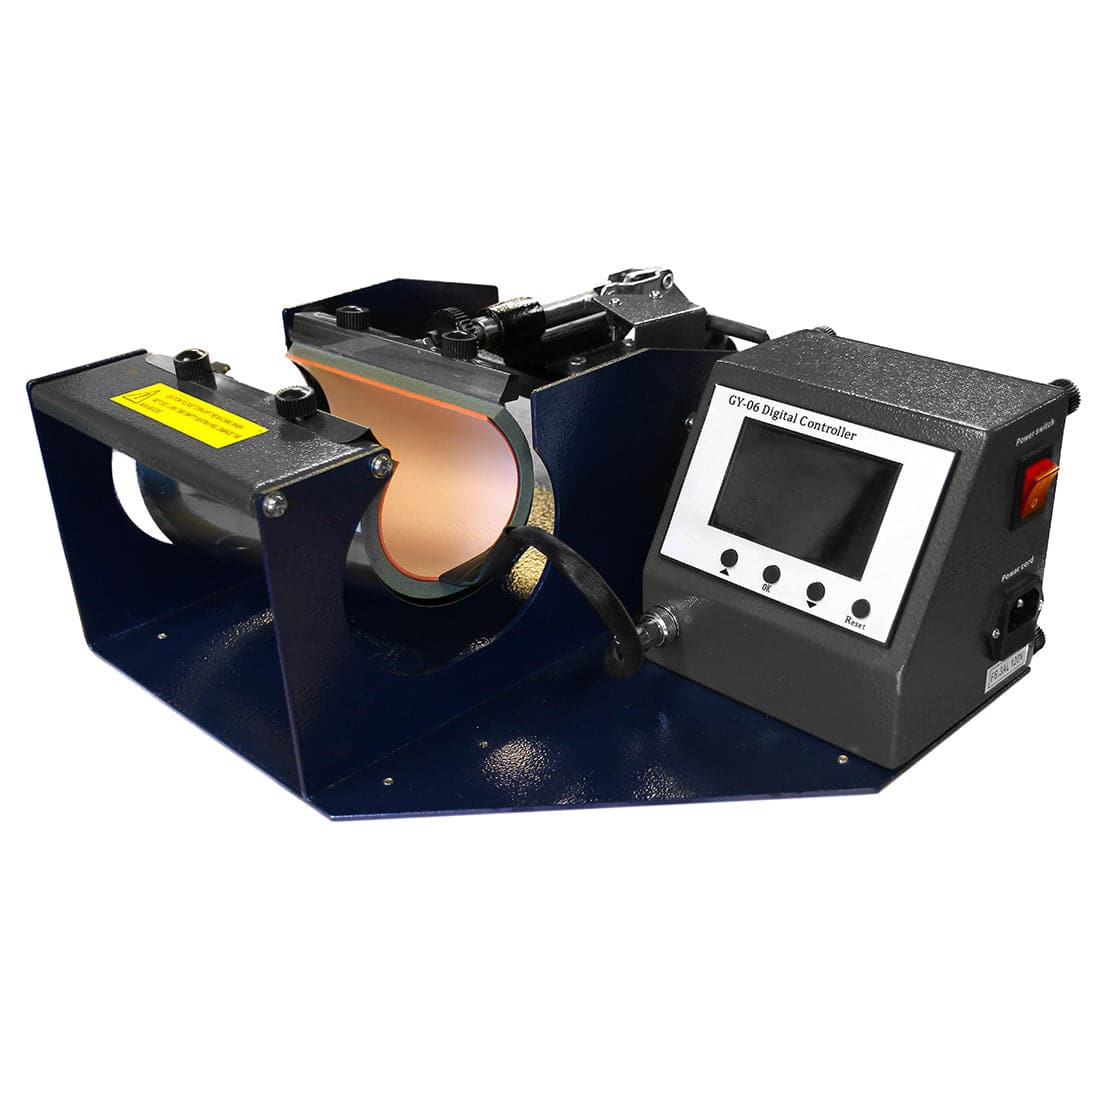 Joto Digital Mug Press - Single Station Includes 2 Elements - Joto Imaging Supplies US